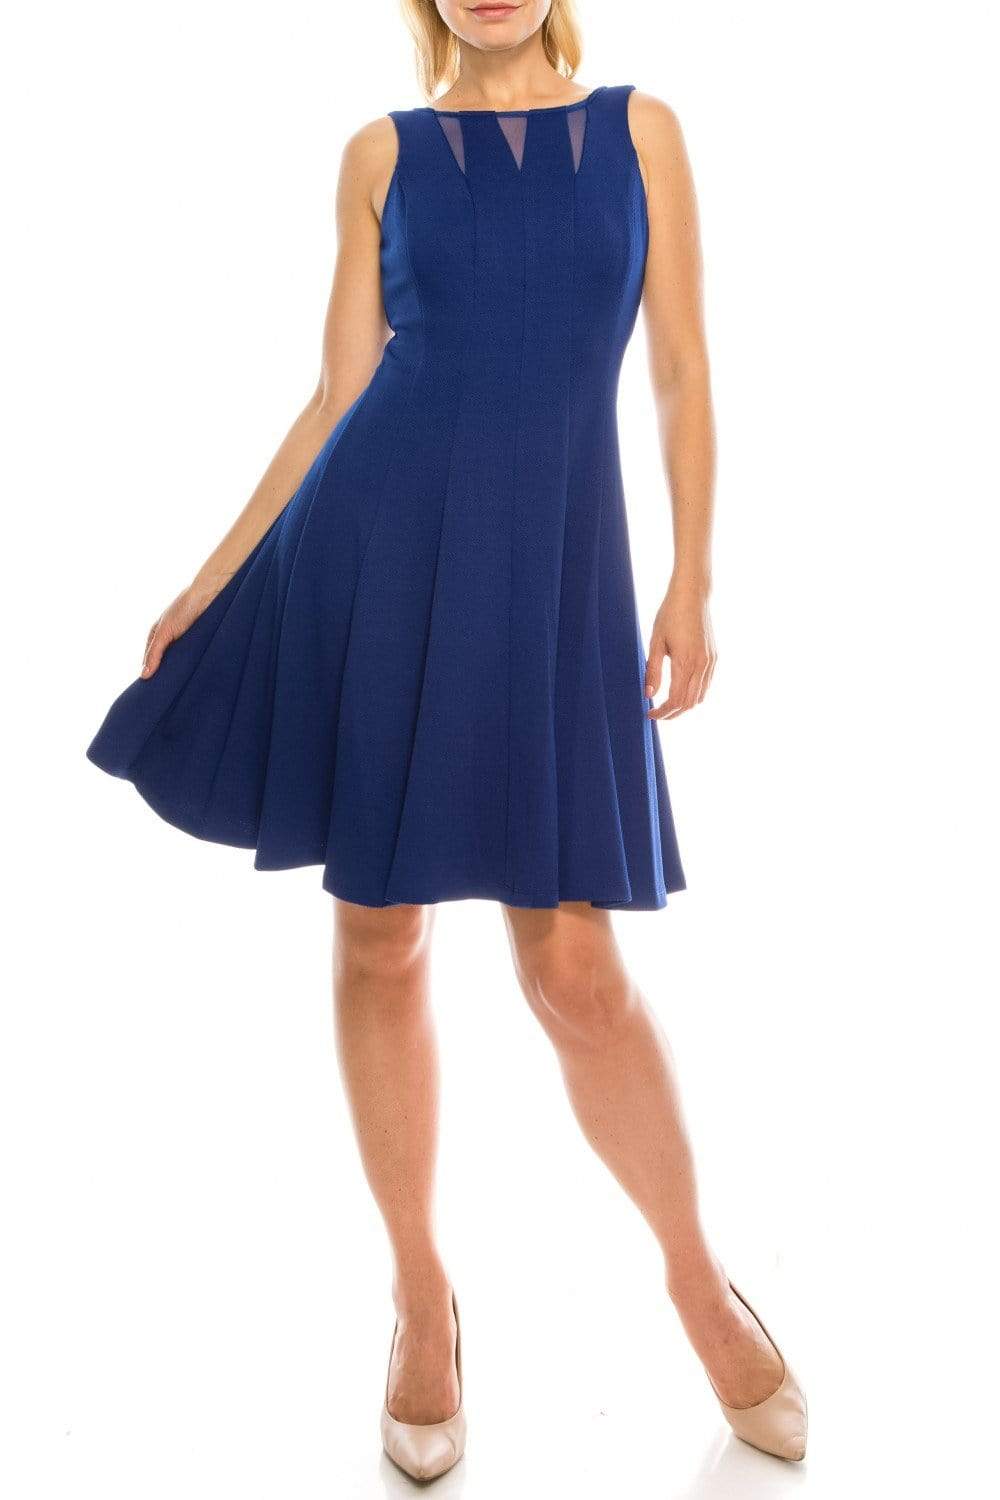 Image of Gabby Skye - 57445MG Sheer Multi-Cutout A-Line Dress